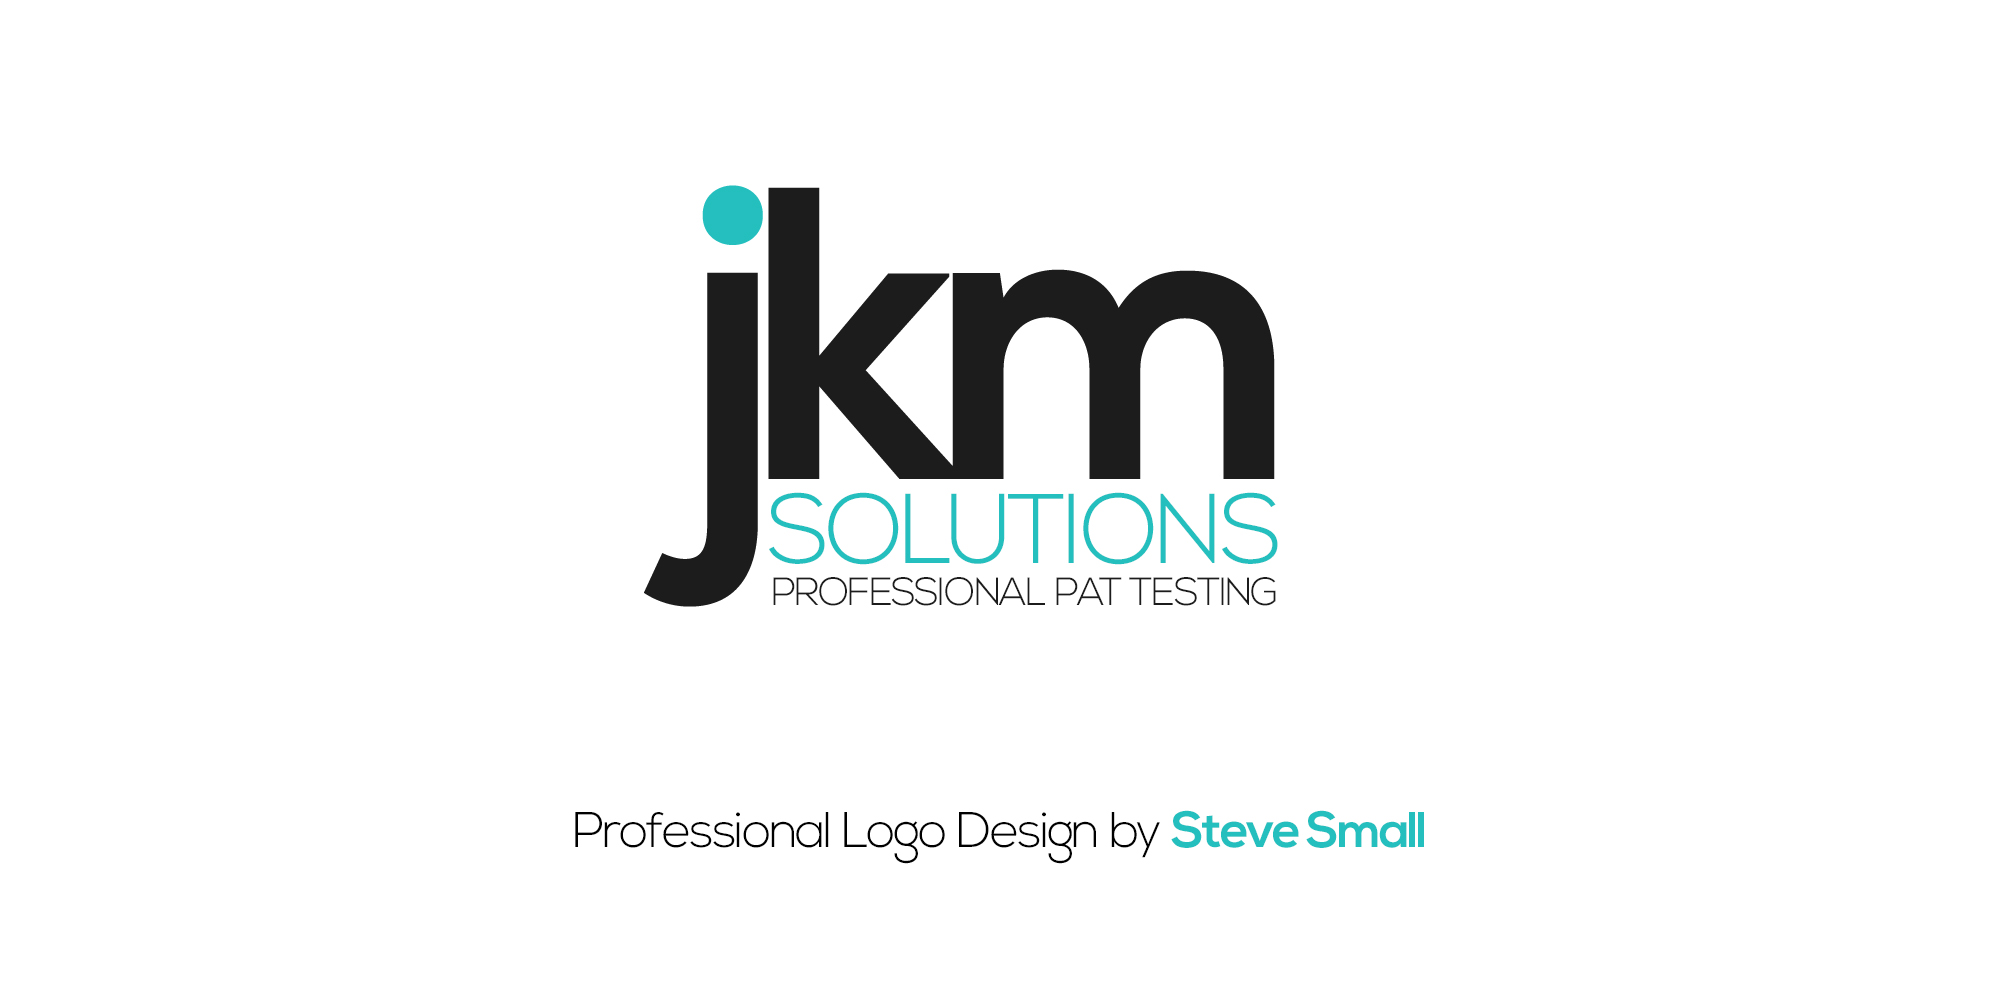 Steve Small Logo Design, The Tiny Creative Co branding design, electrician logo design by Steve Small